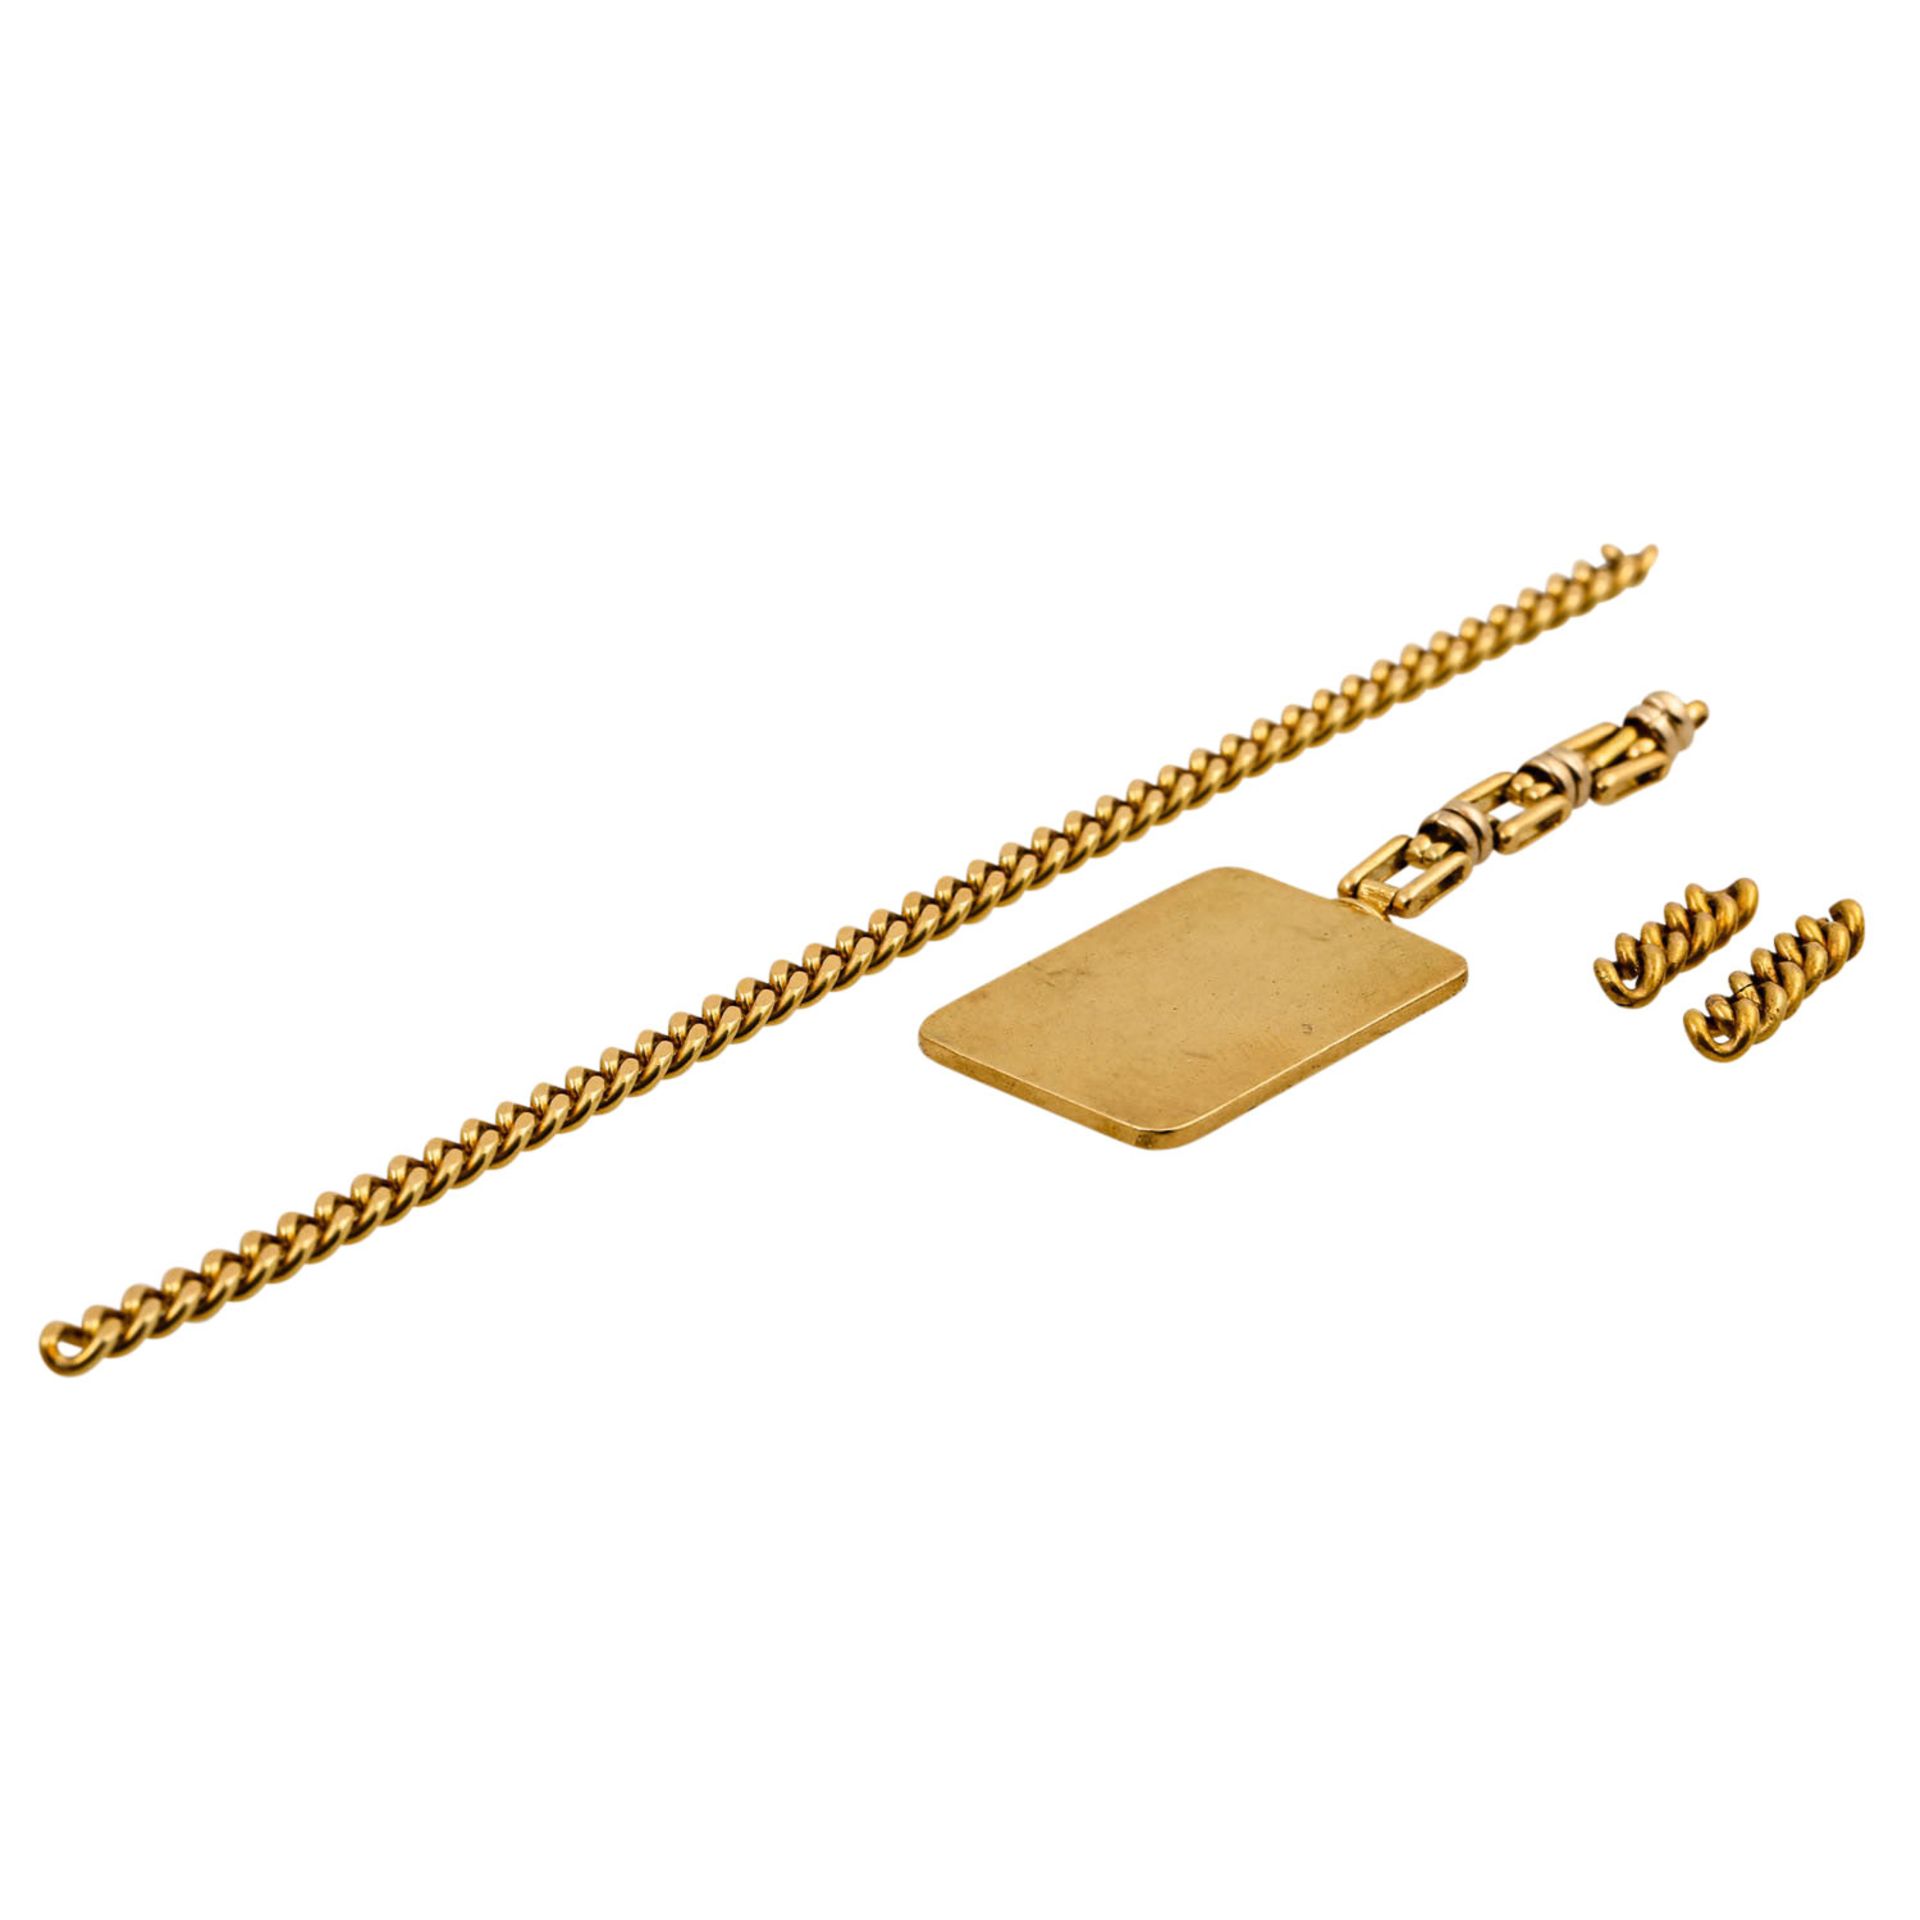 Diverse Teile Altgold, davon 14K 15,8 gr, 18K 45,7 gr, 2 Stifte unedles Metall. (107) - Image 2 of 8